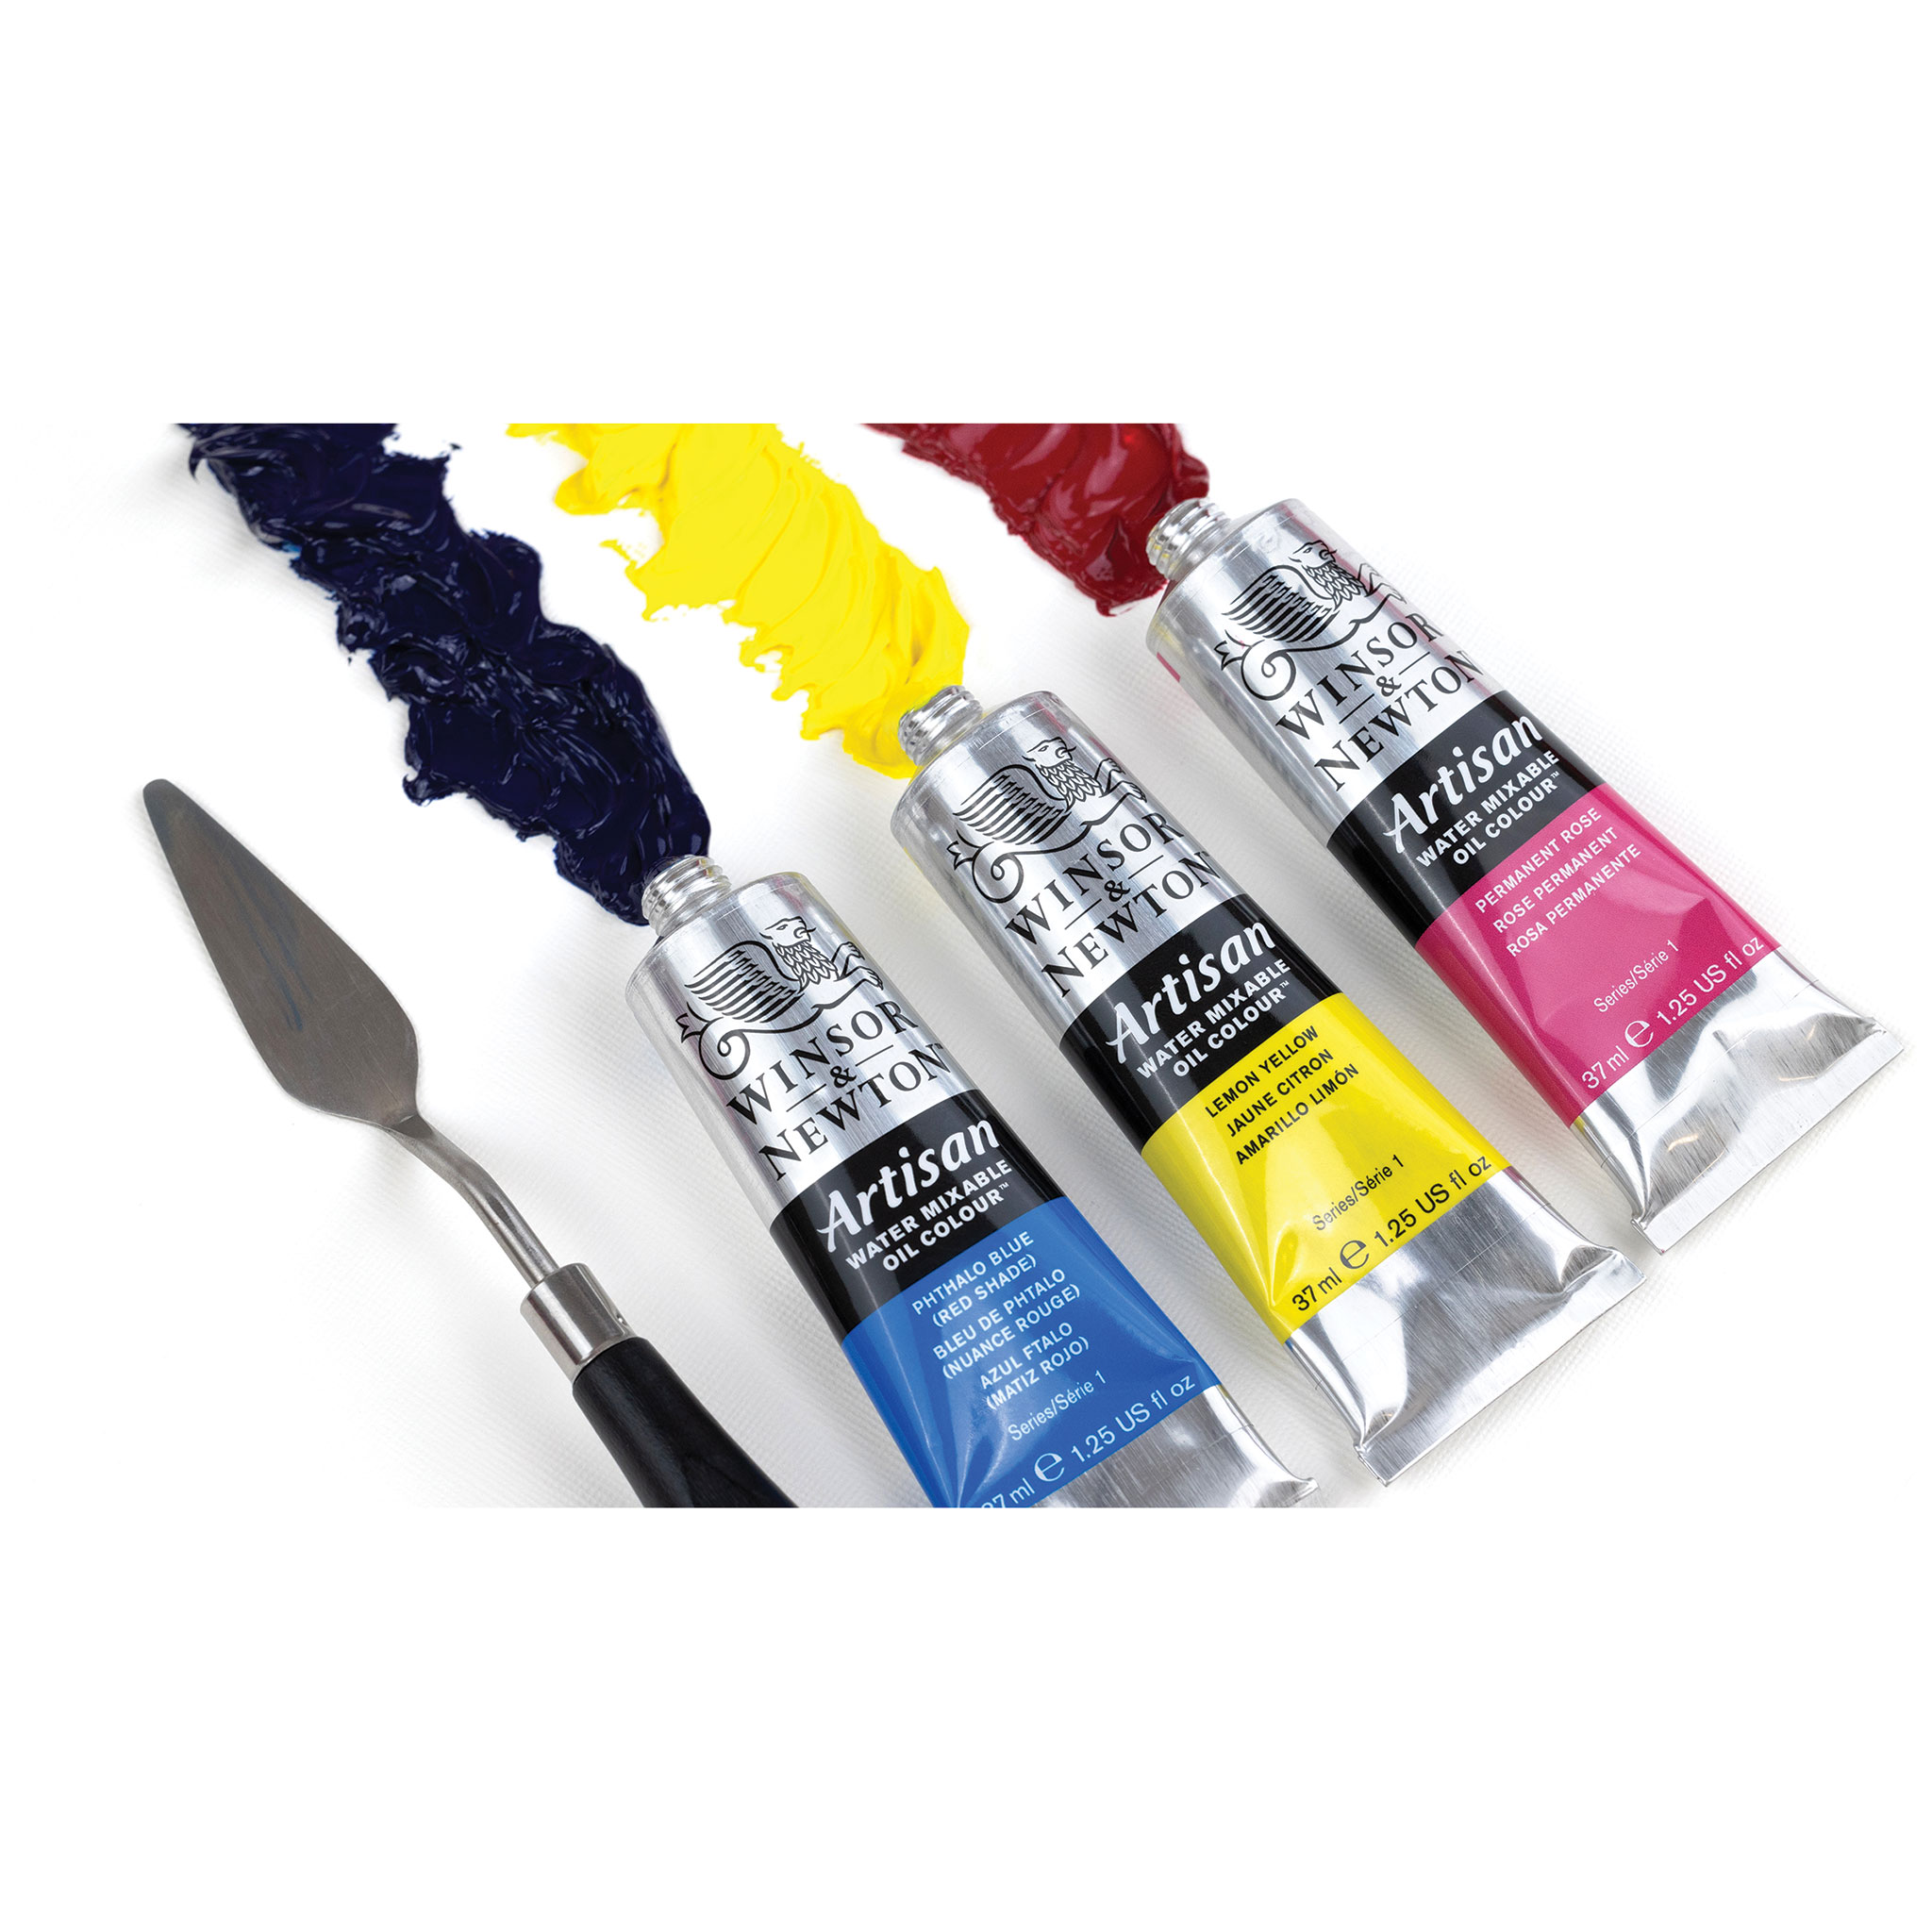  Winsor & Newton Artisan Water Mixable Oil Color Paint, Studio  Set, 1.25-oz (37ml) Tubes, Set of 10